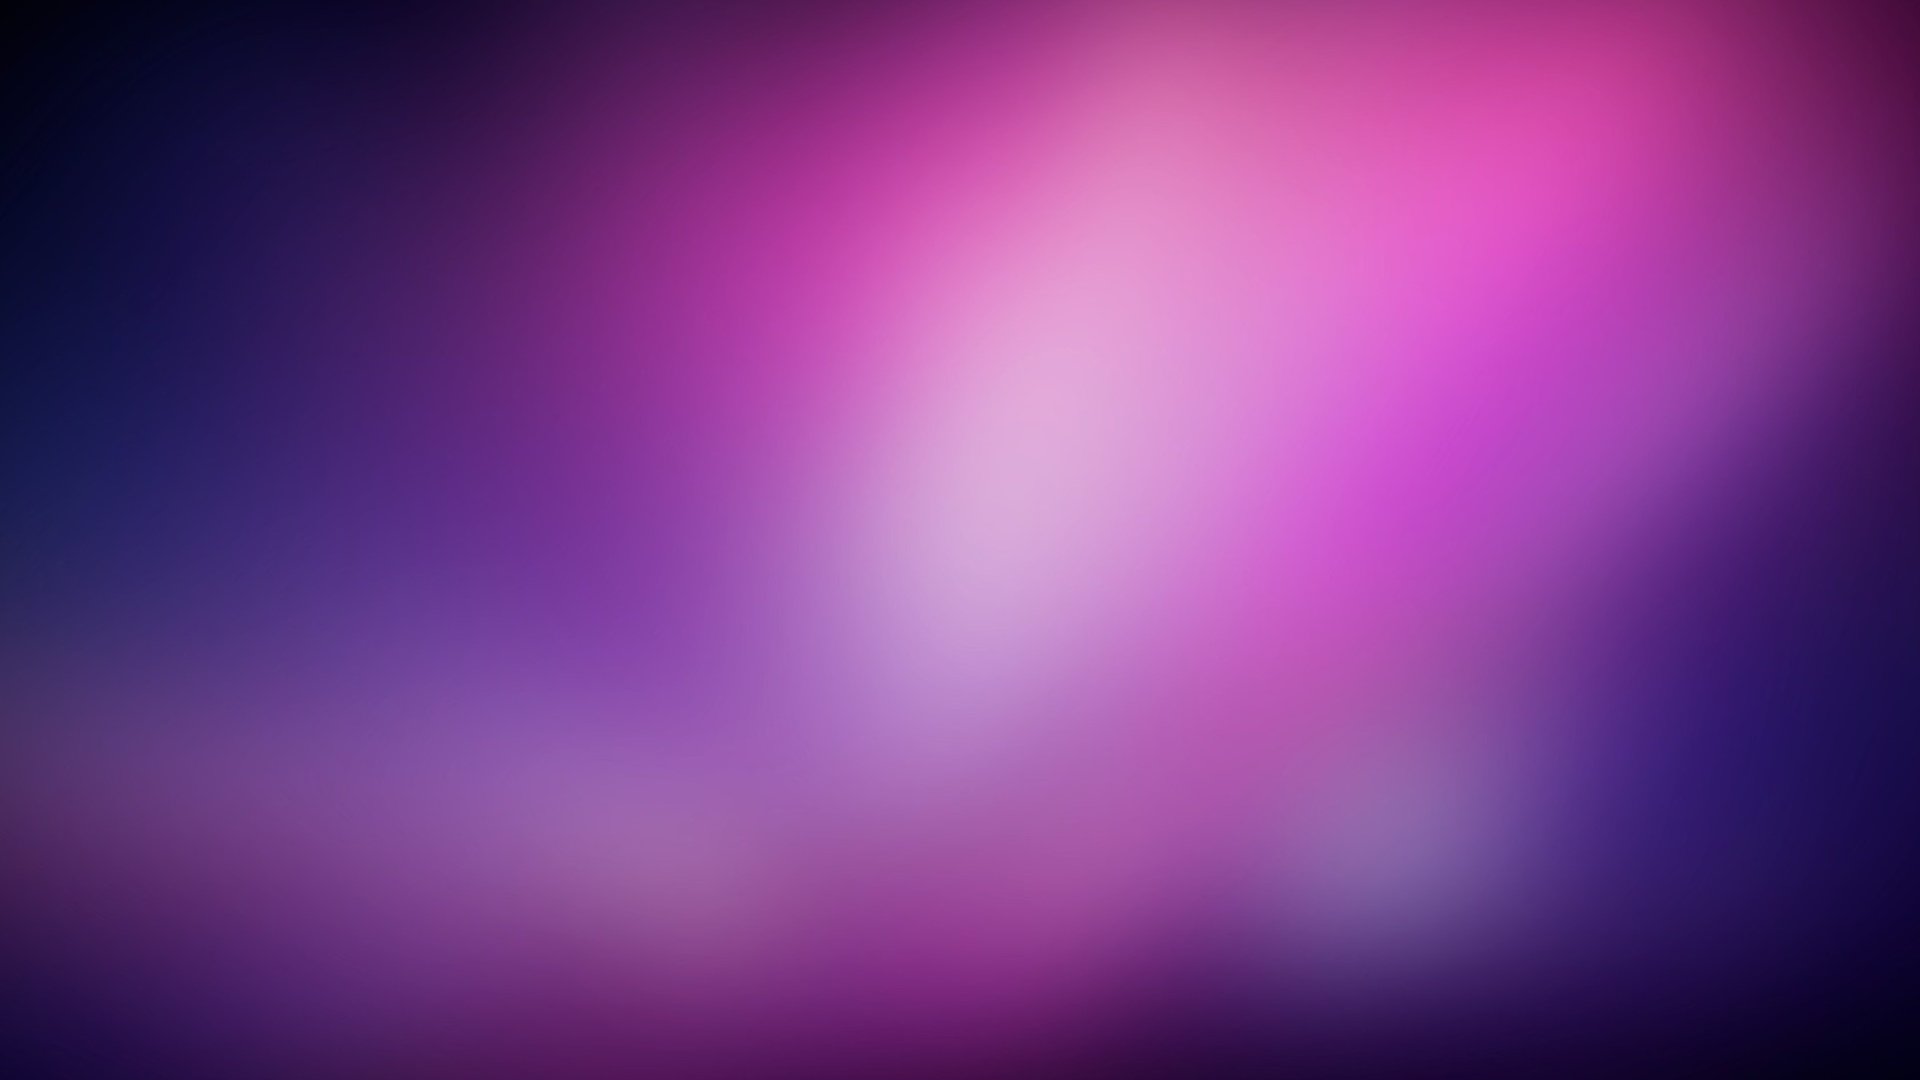 Free download Purple background ID:405405 full hd 1080p for desktop